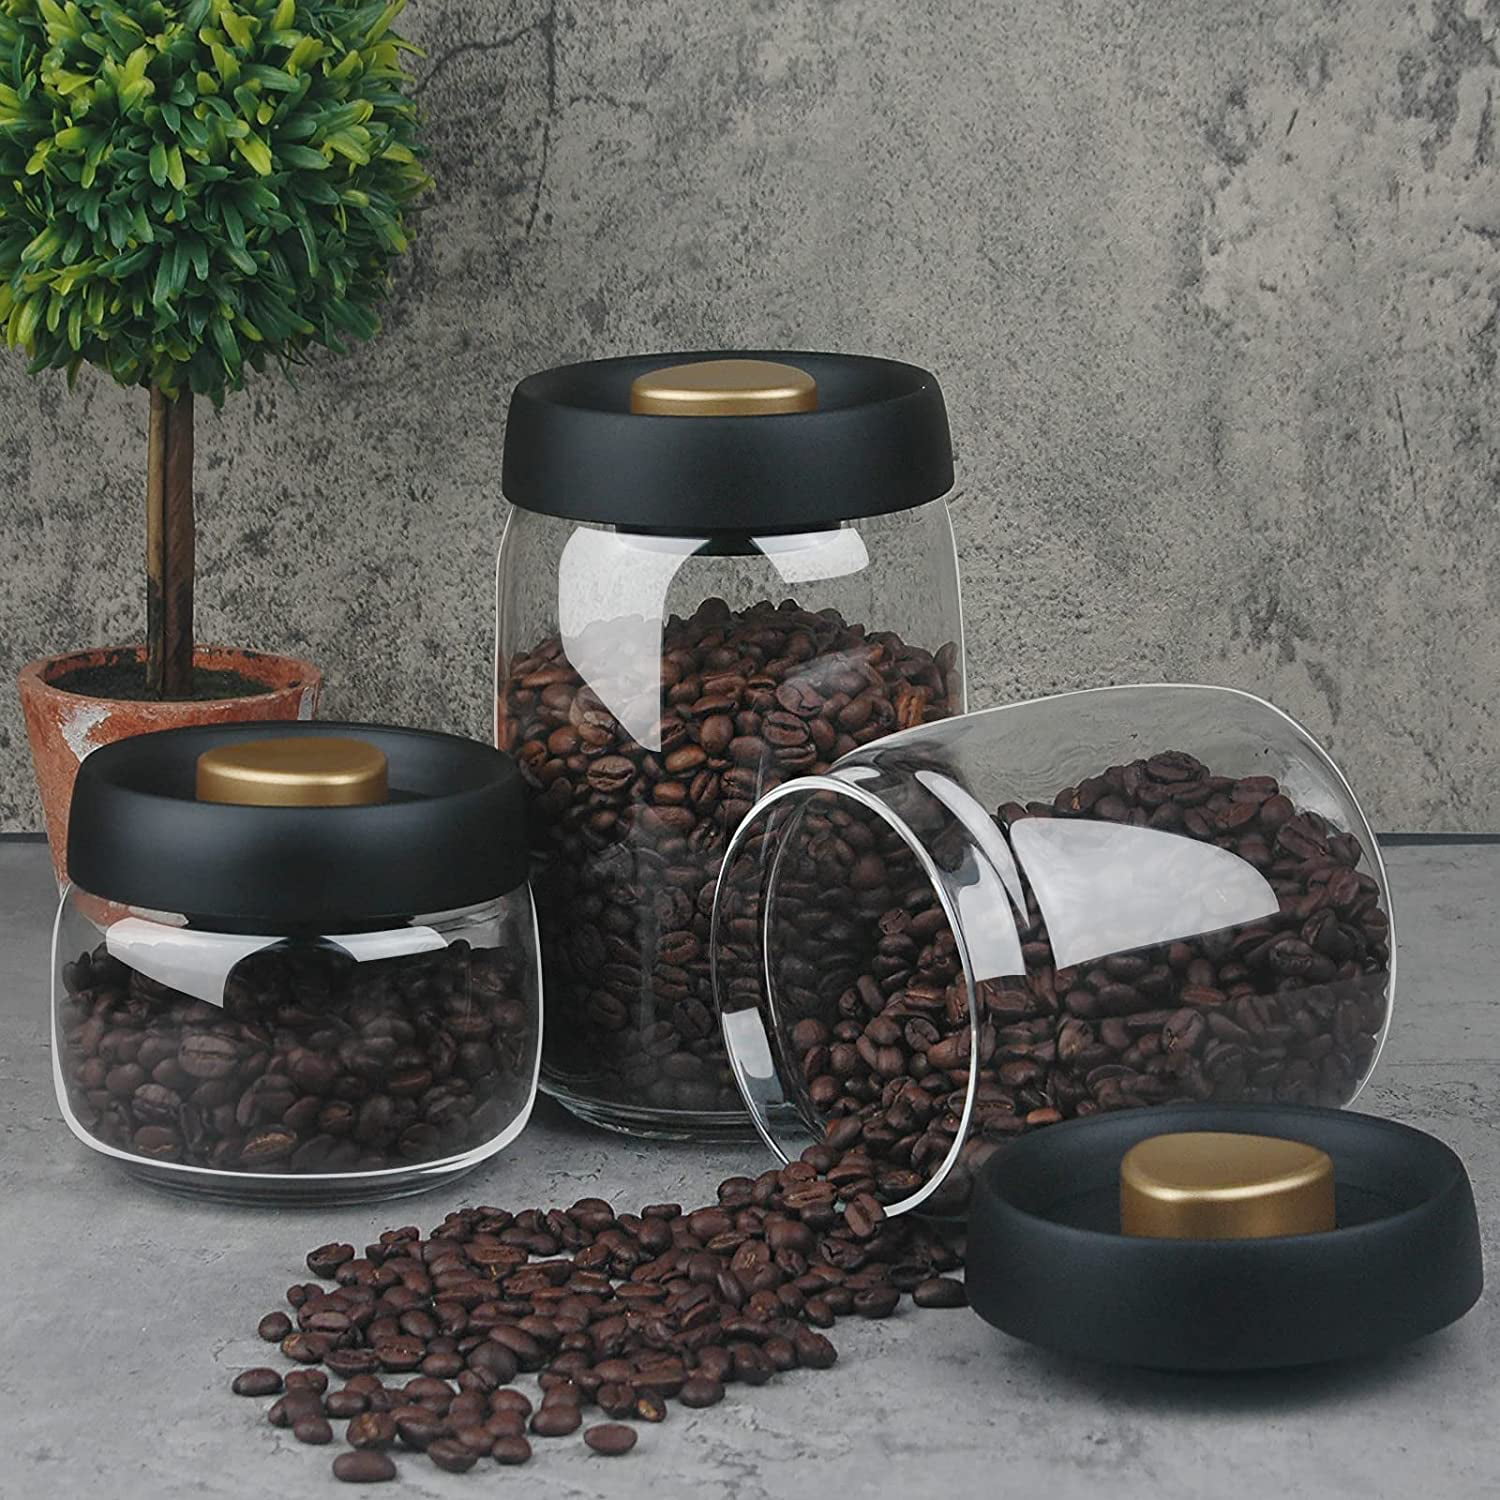 Large (5lb) Airtight Coffee & Bread Storage Container – TIGHTVAC